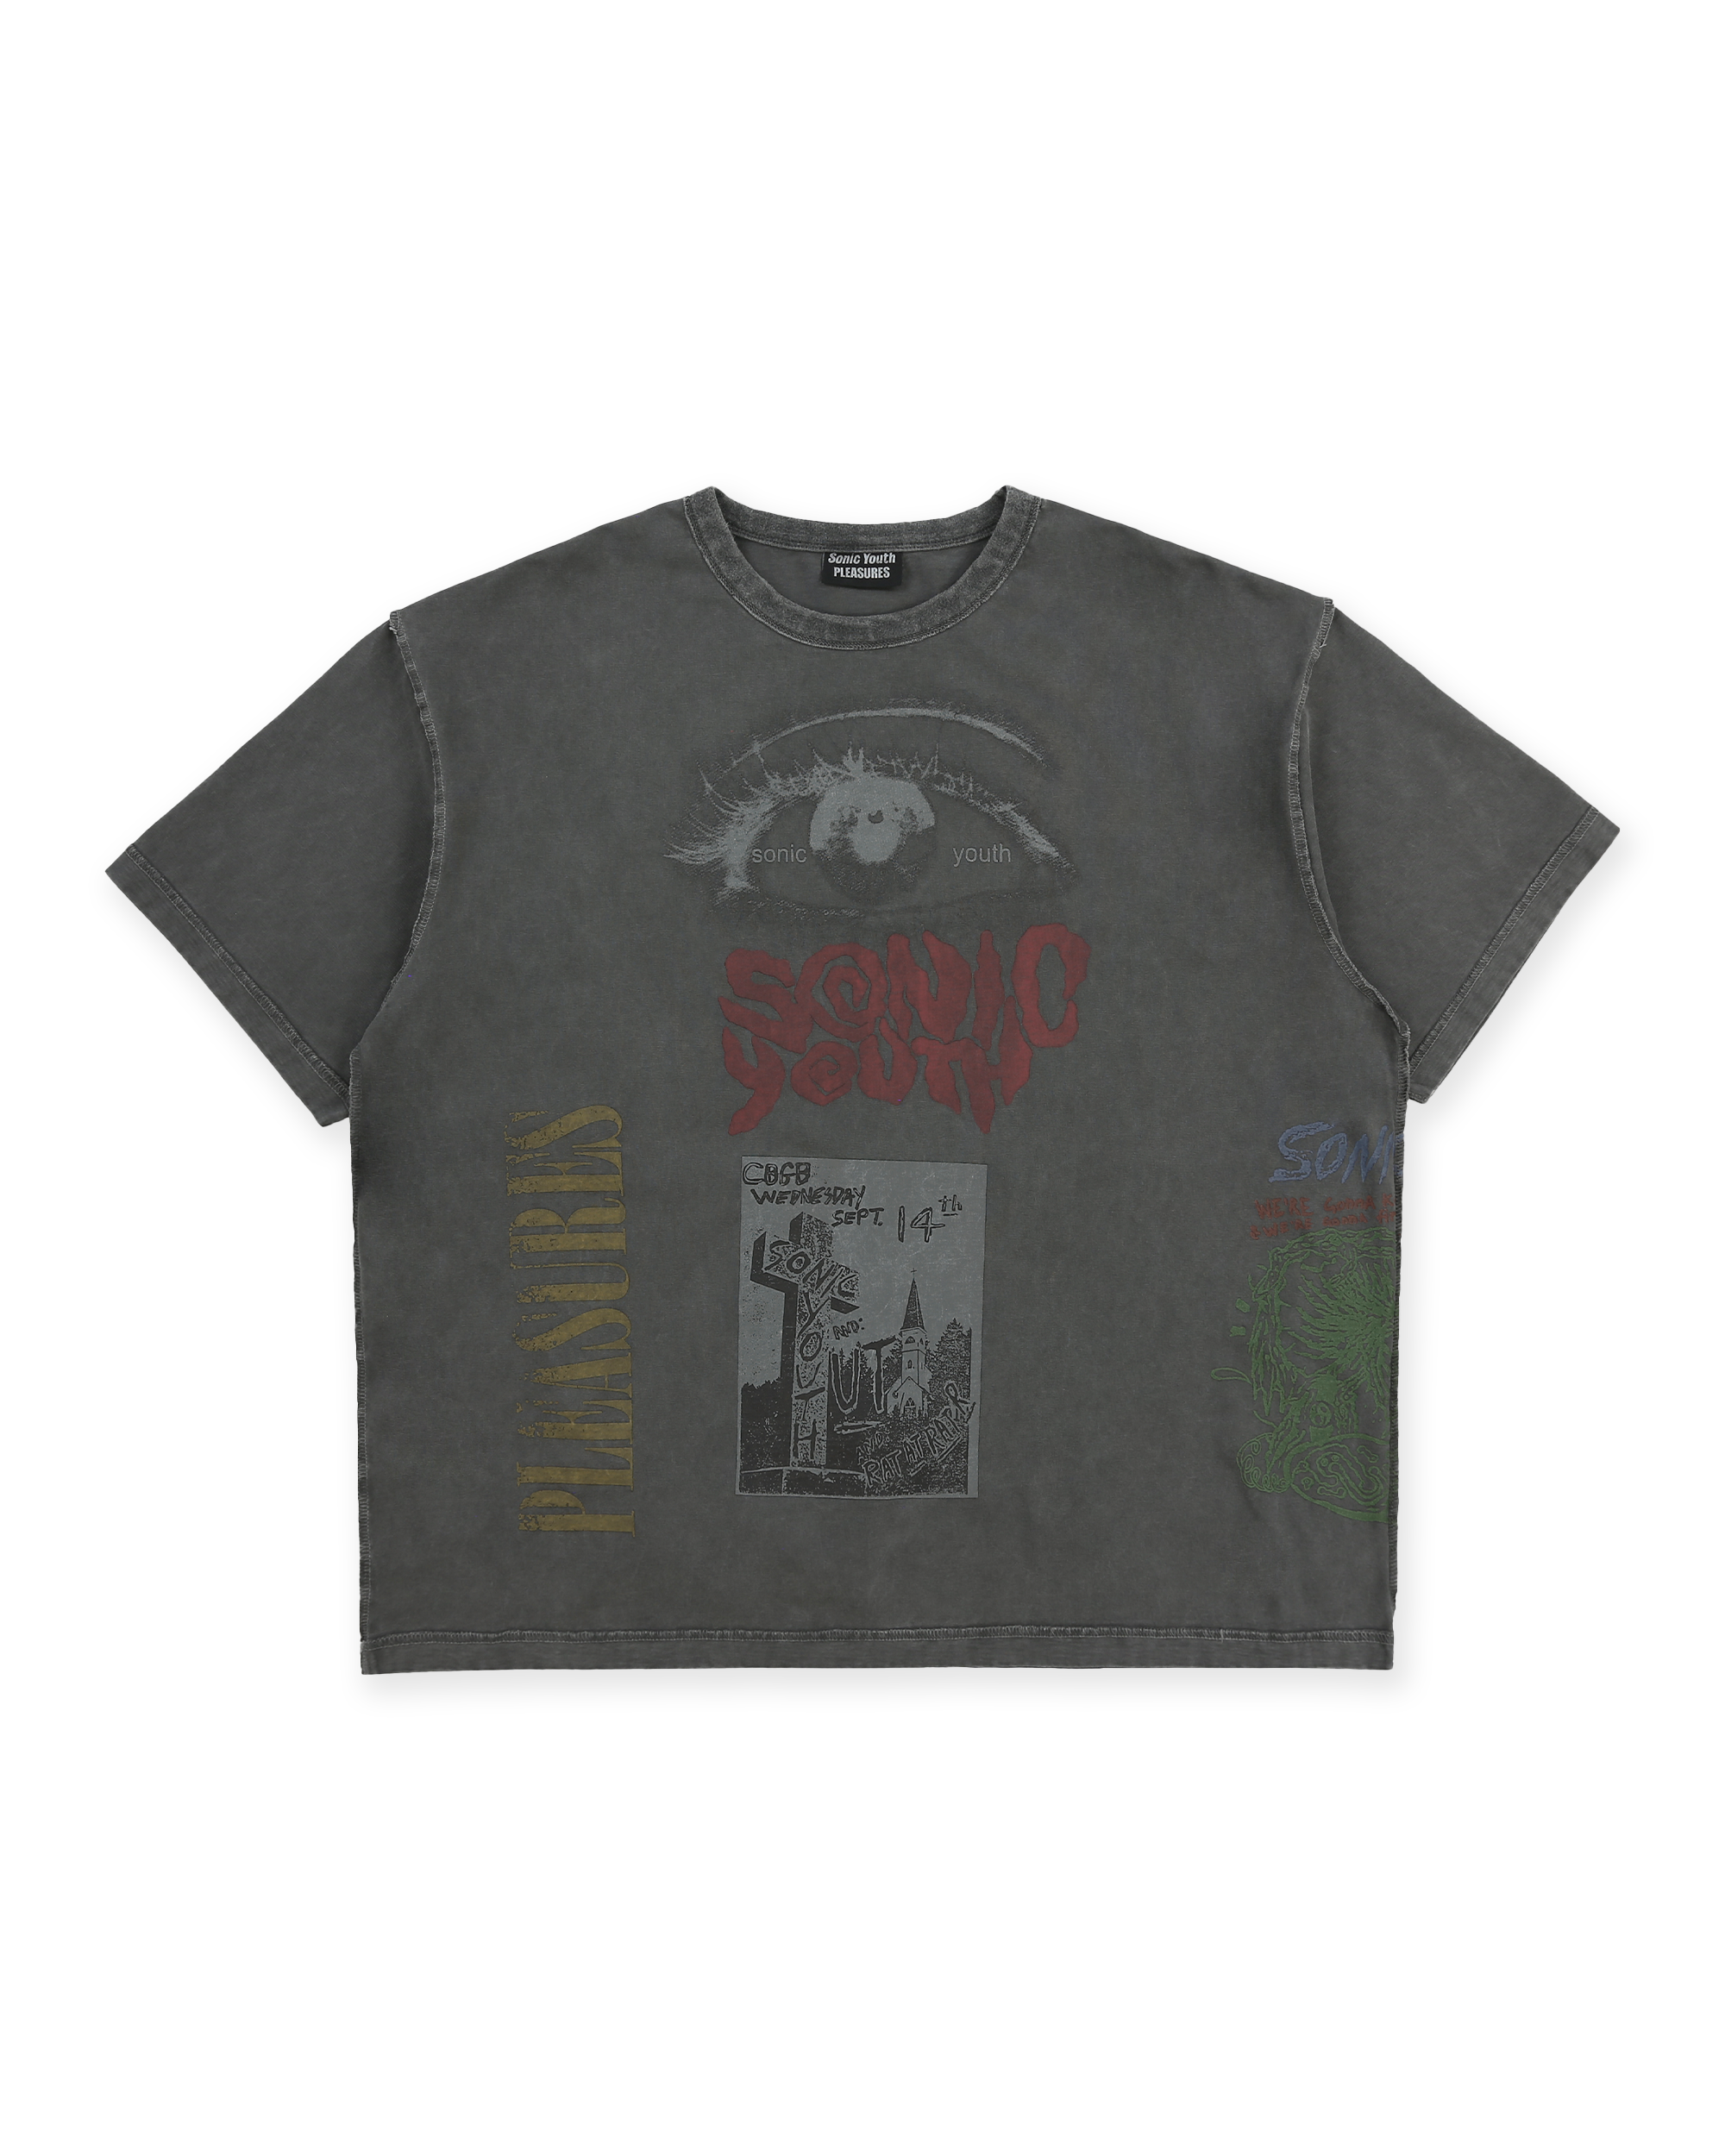 Sonic Youth Test Print Shirt - Grey